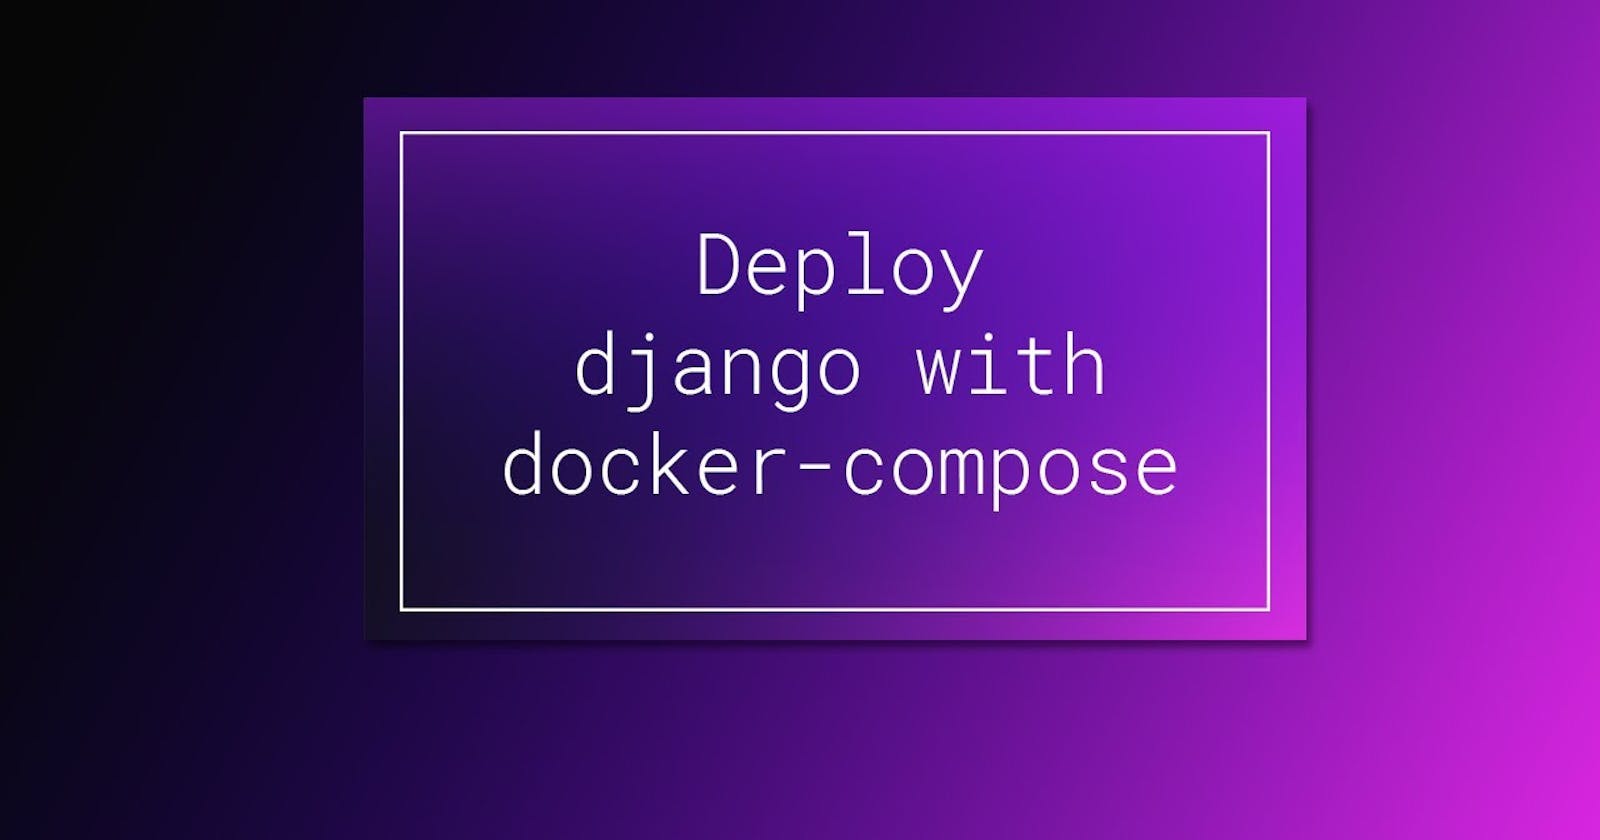 Dockerize a Django app with a MySQL container